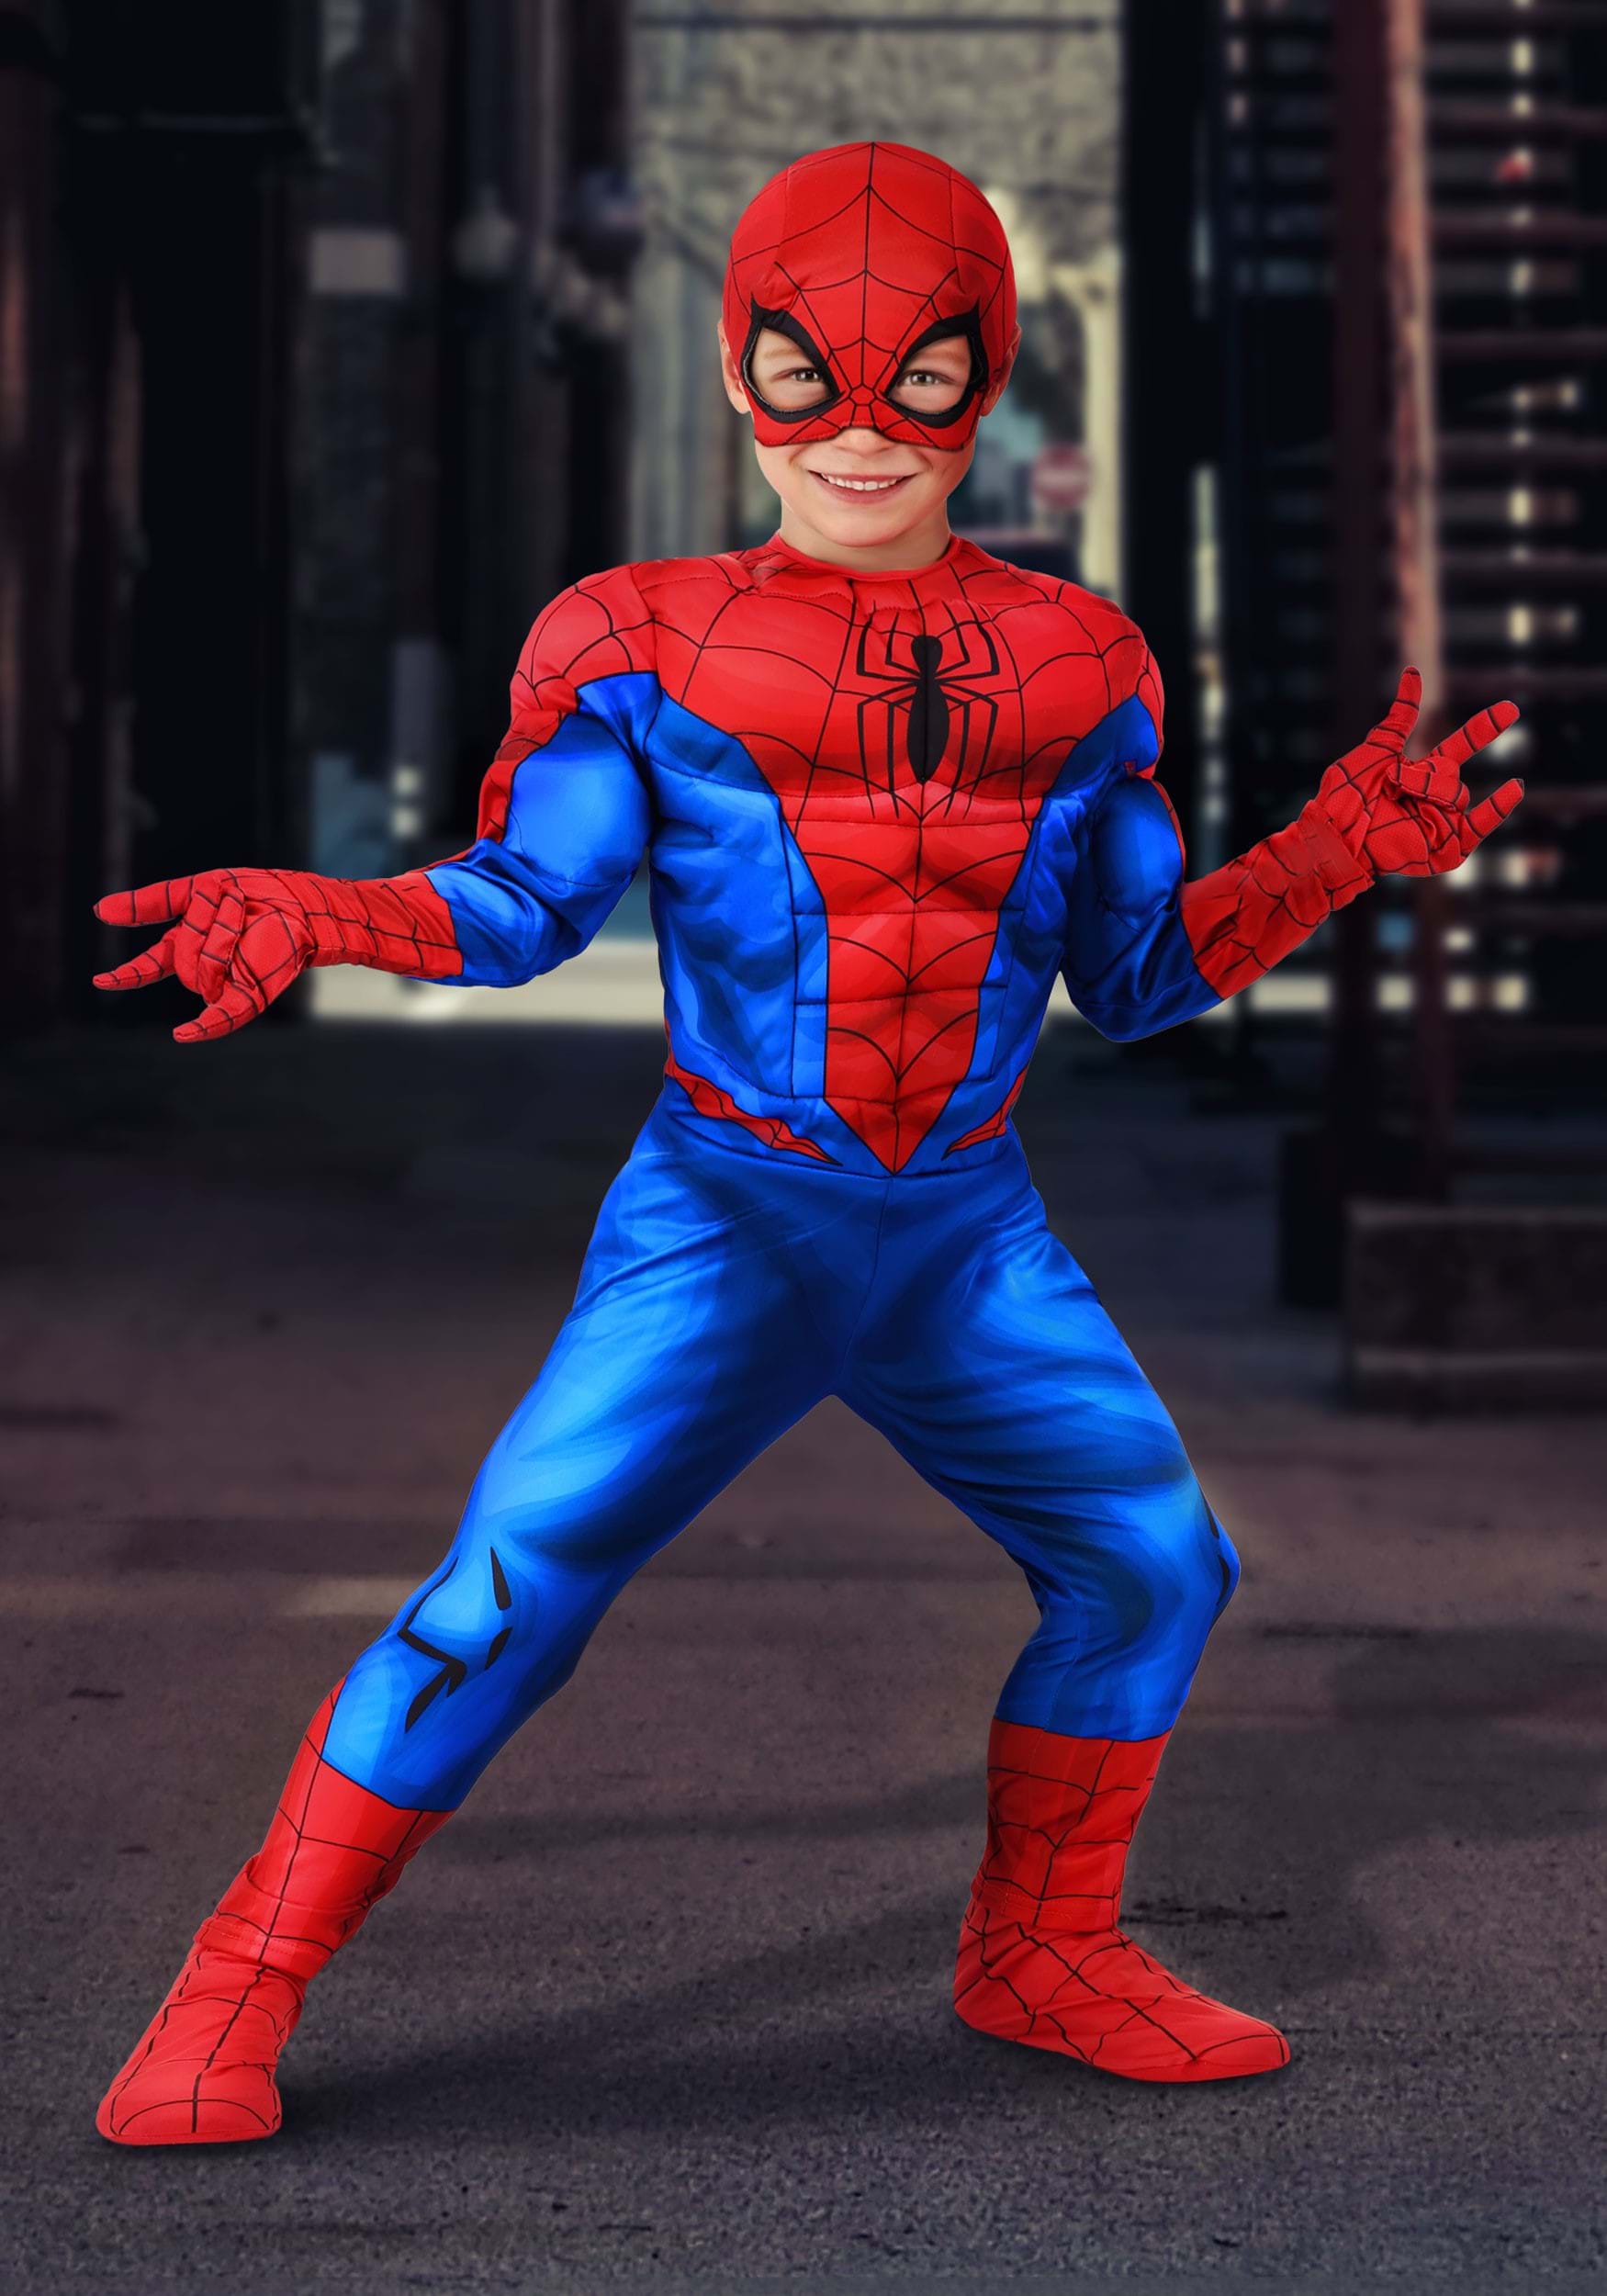 Boy's Marvel Spider-Man Toddler Costume